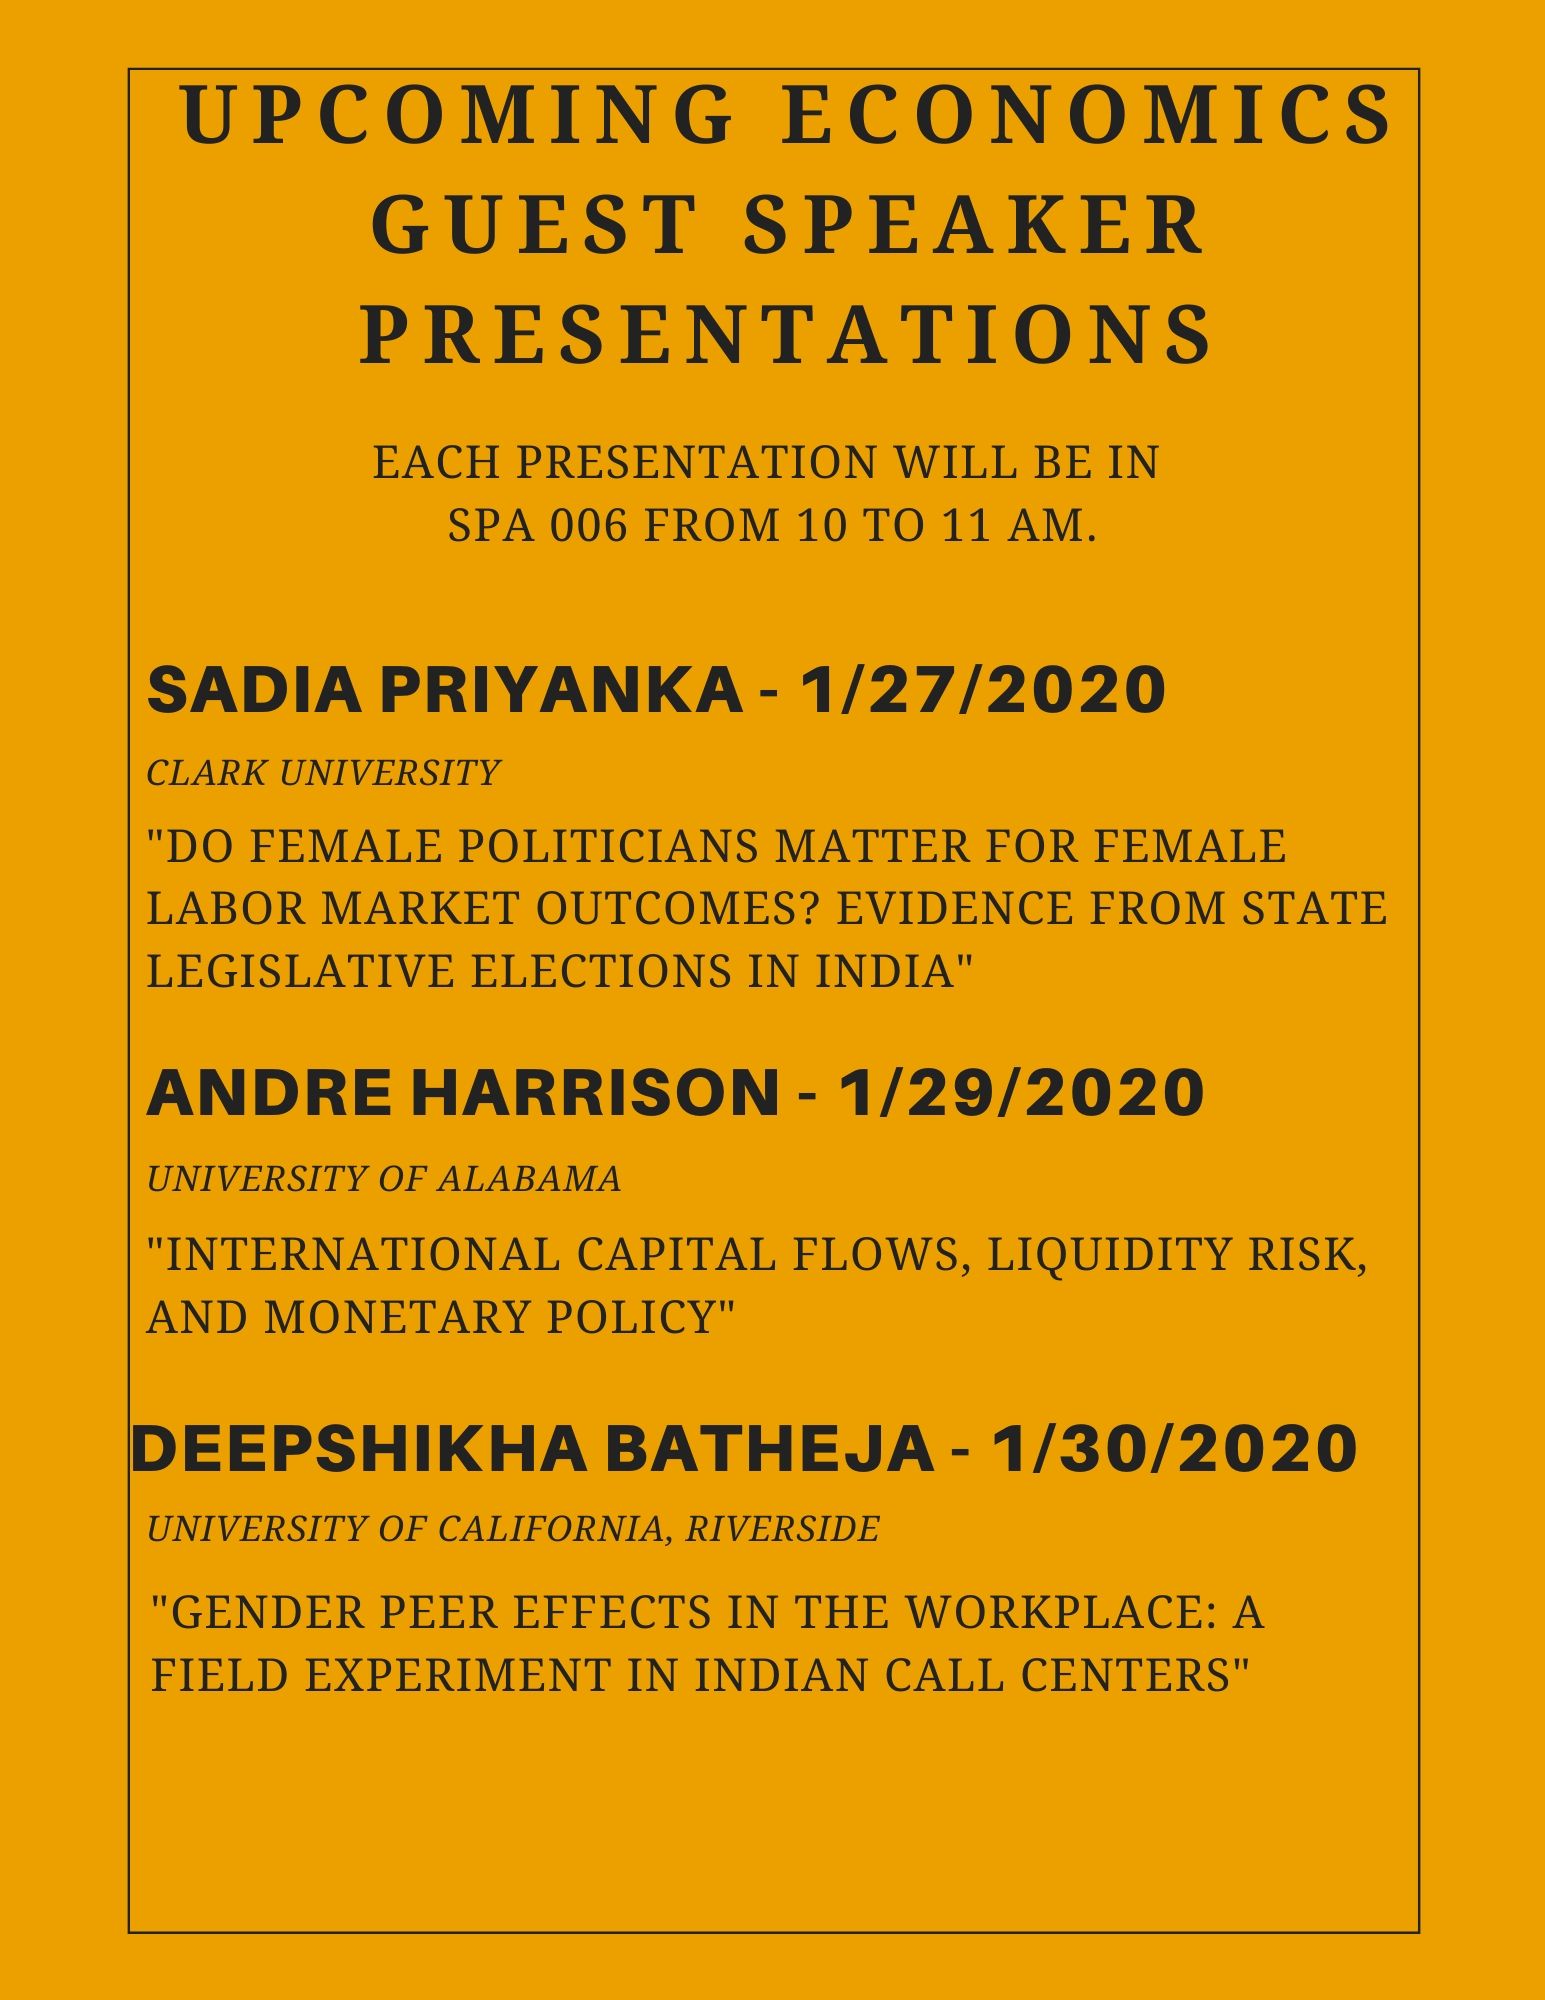 Guest Speaker Presentations